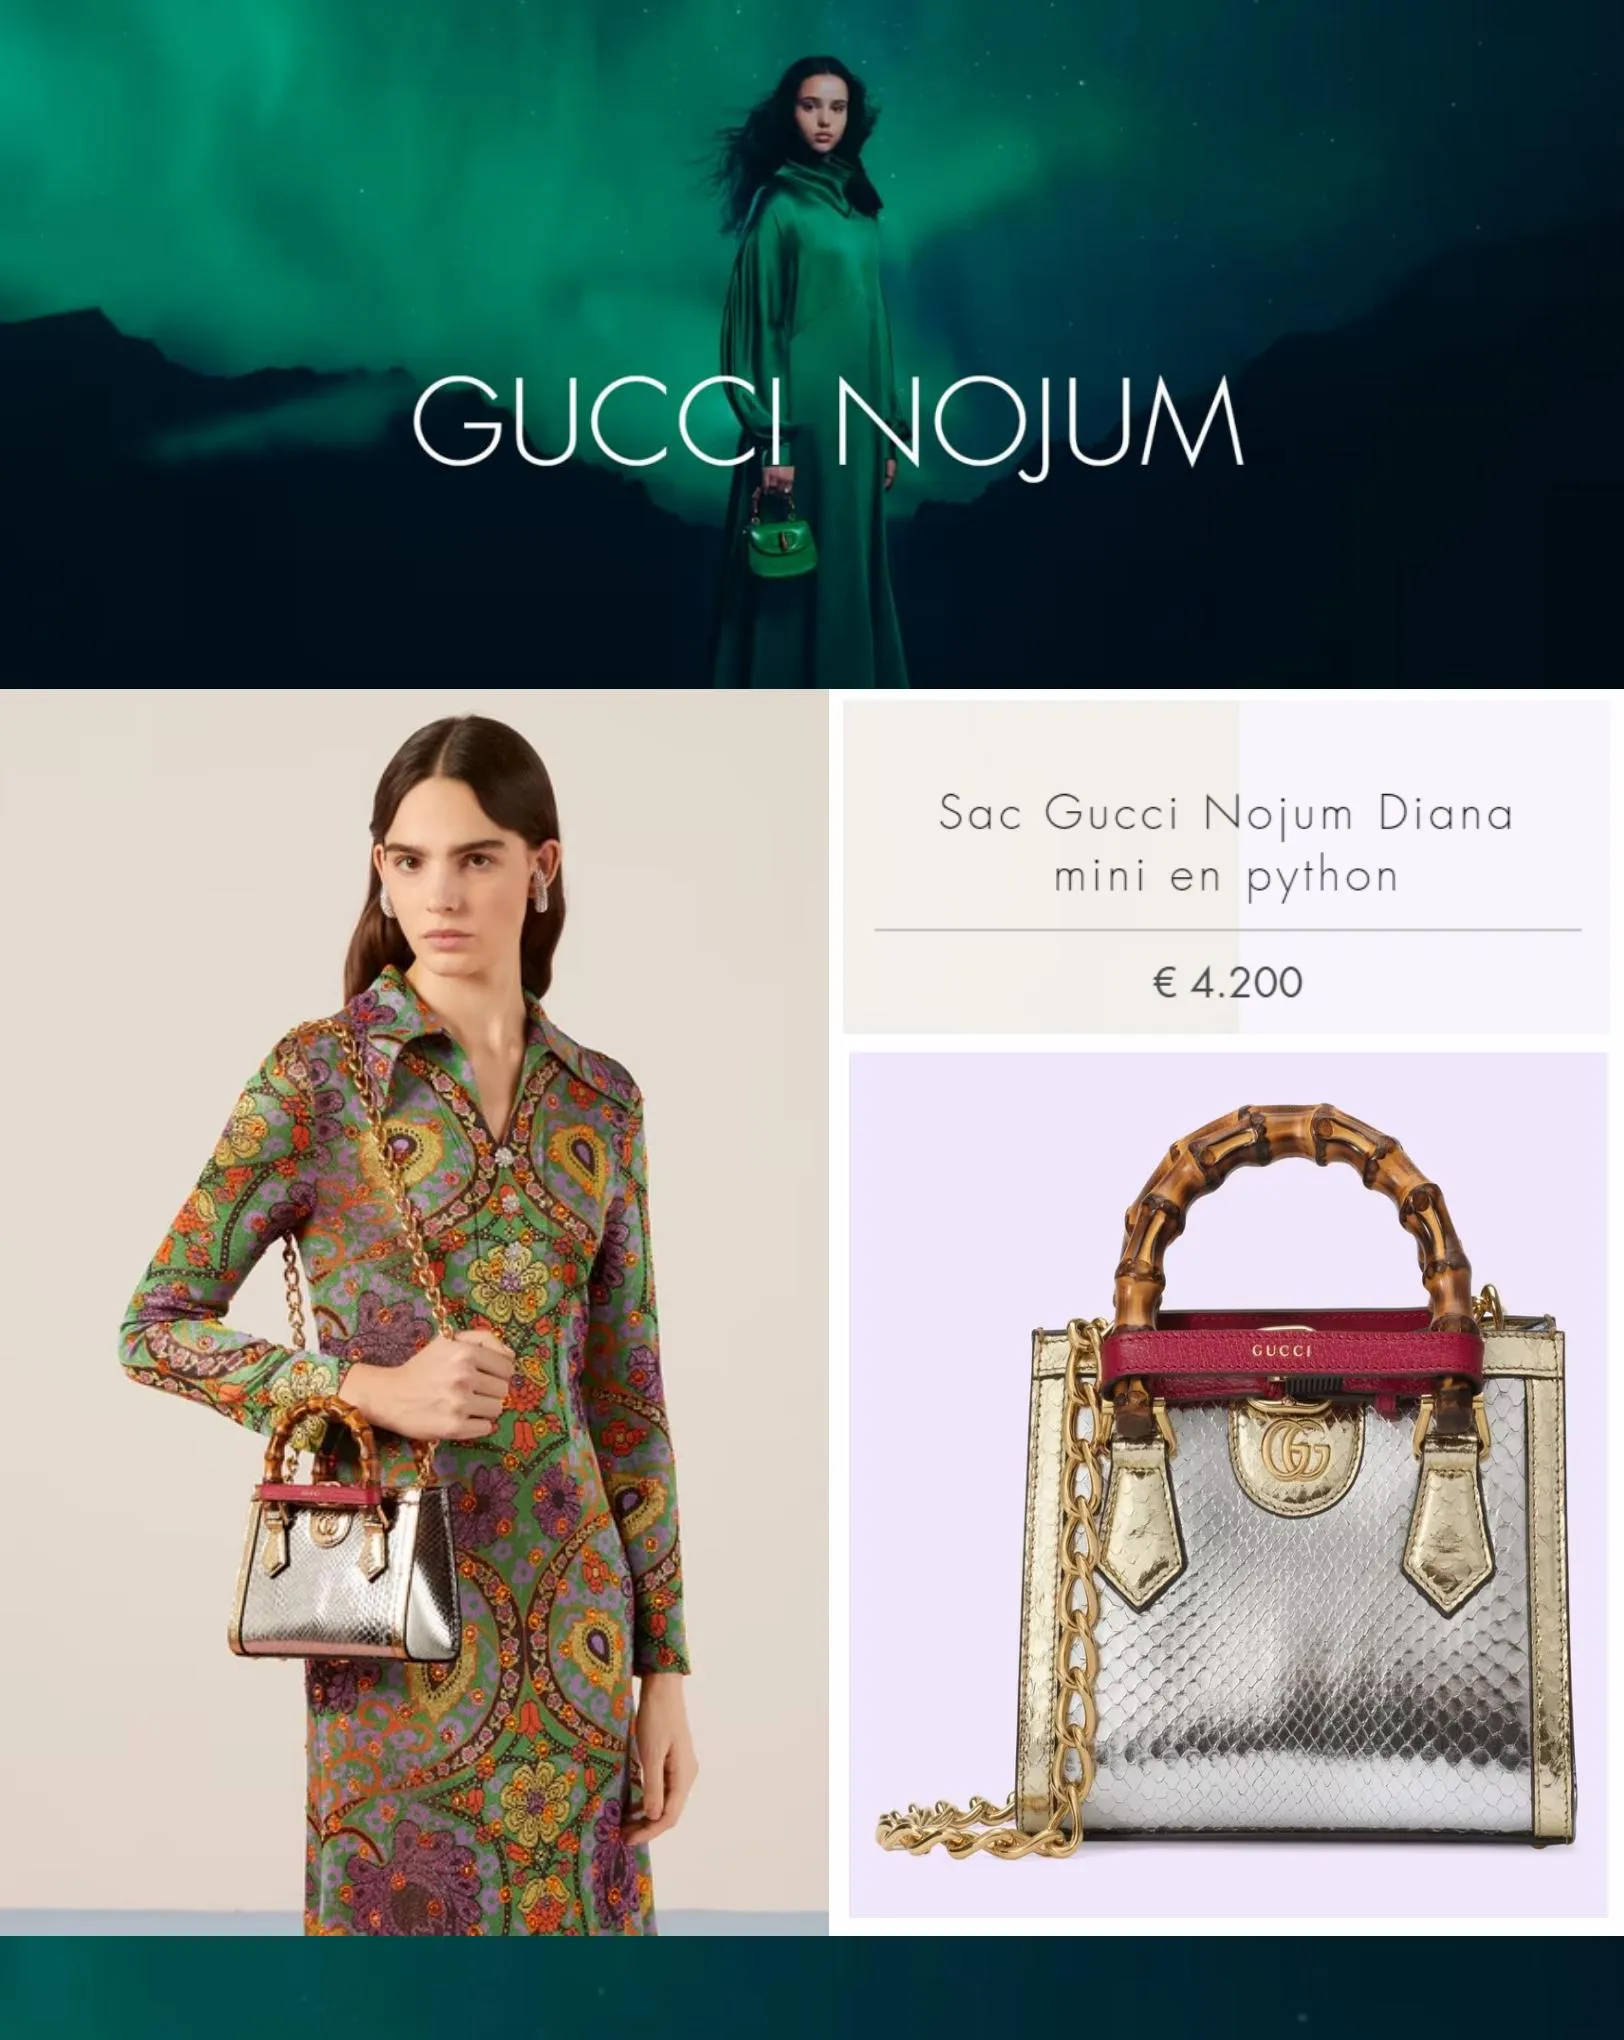 Catalogue Gucci Nojum, page 00005